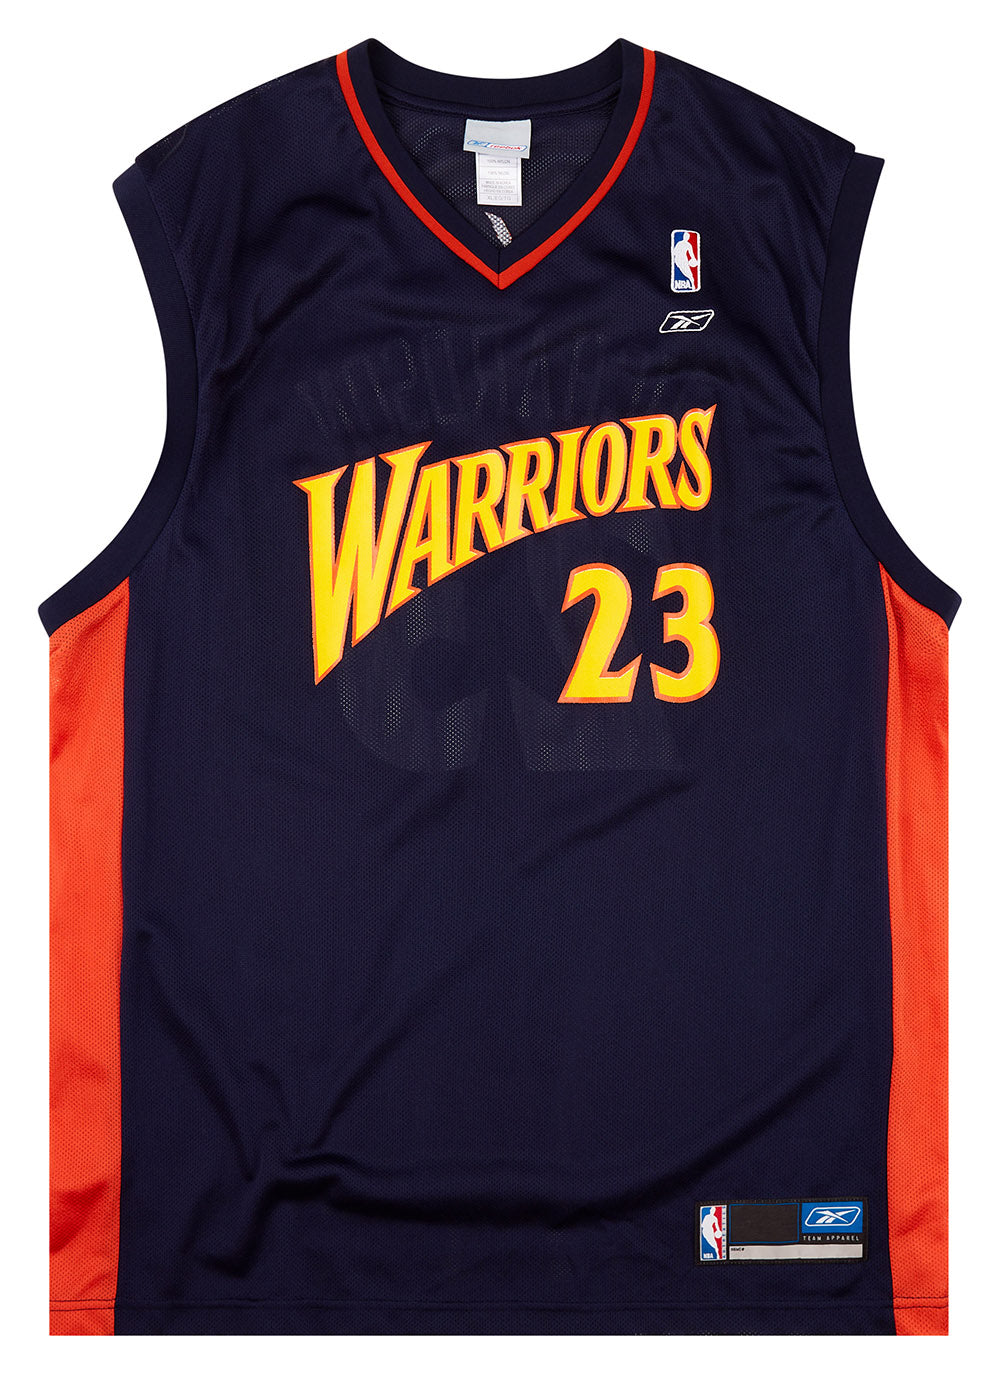 Golden State Warriors Jason Richardson Reebok Jersey Size XL for